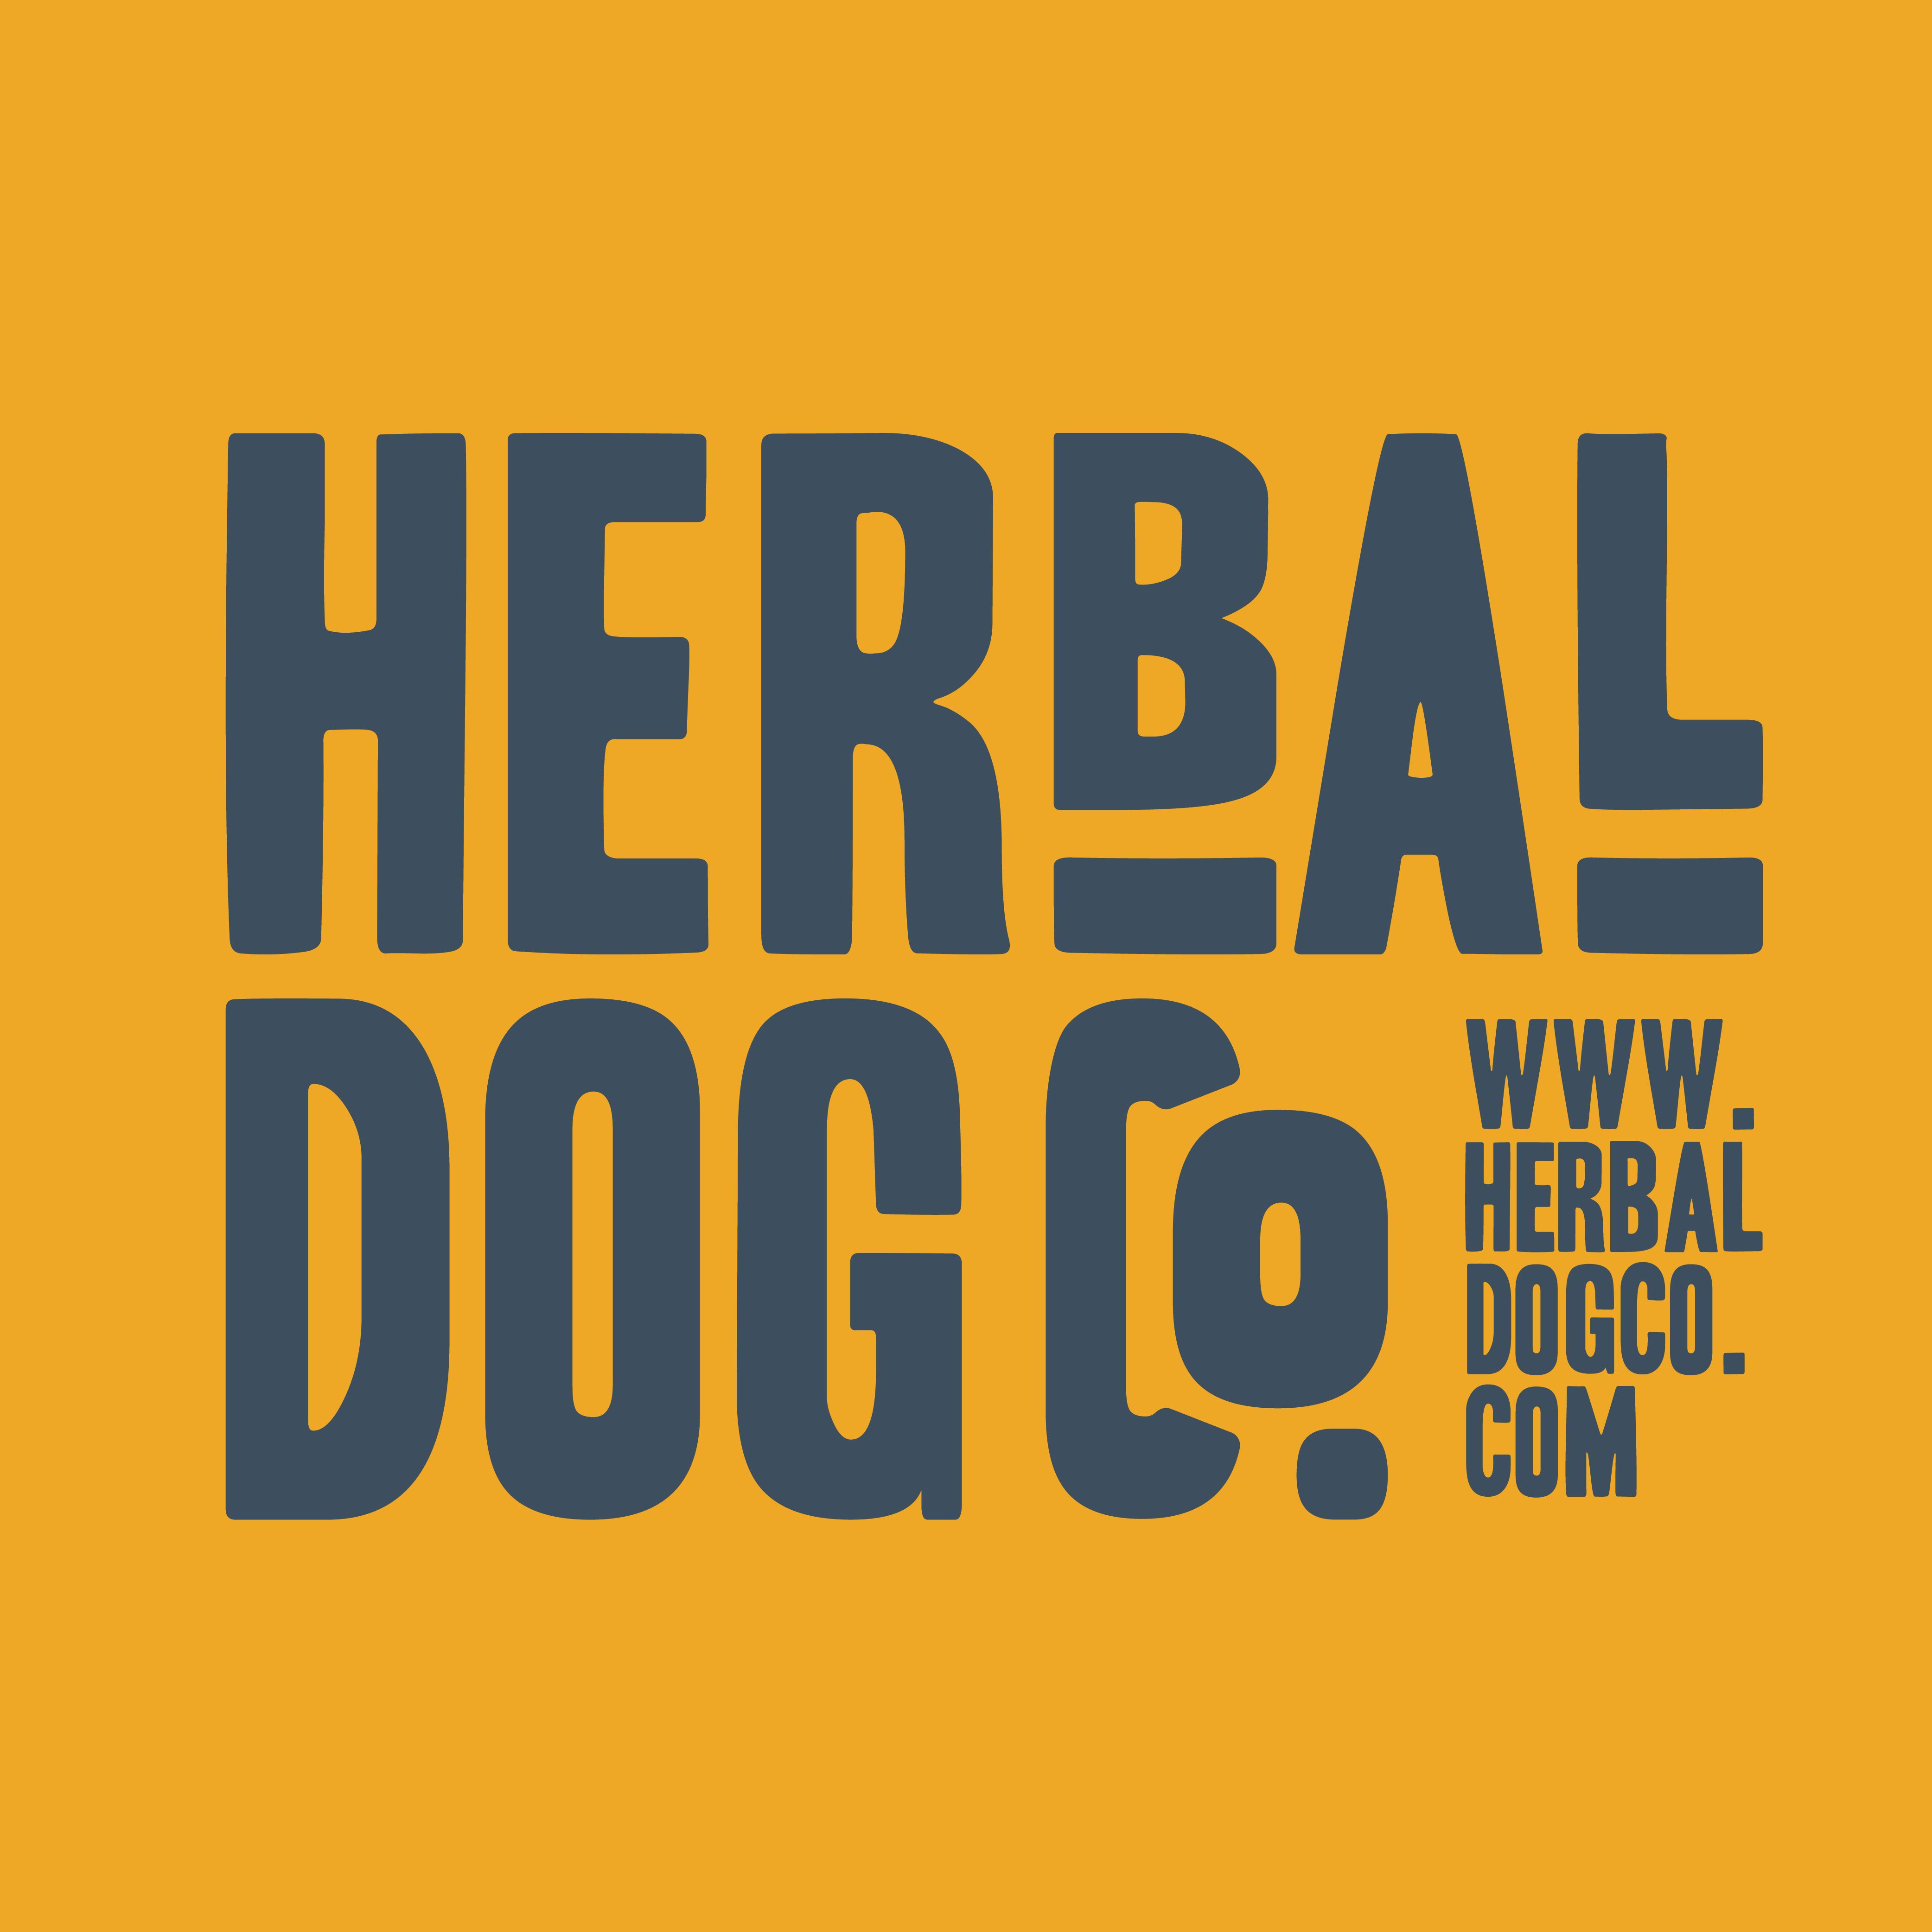 Herbal Dog Co